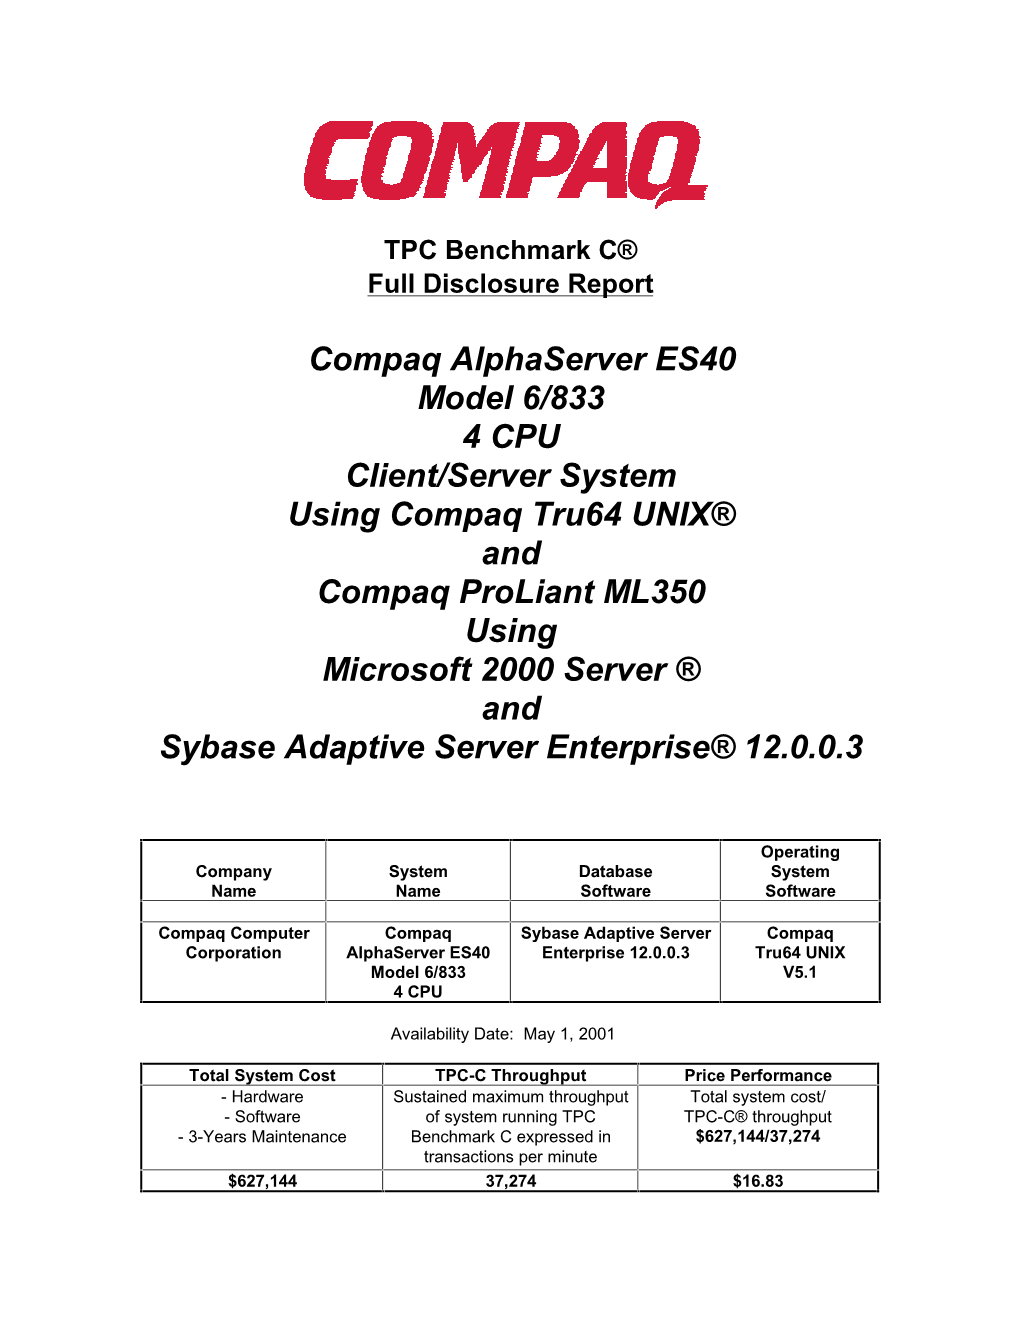 Compaq Alphaserver ES40 Model 6/833 4 CPU Client/Server System